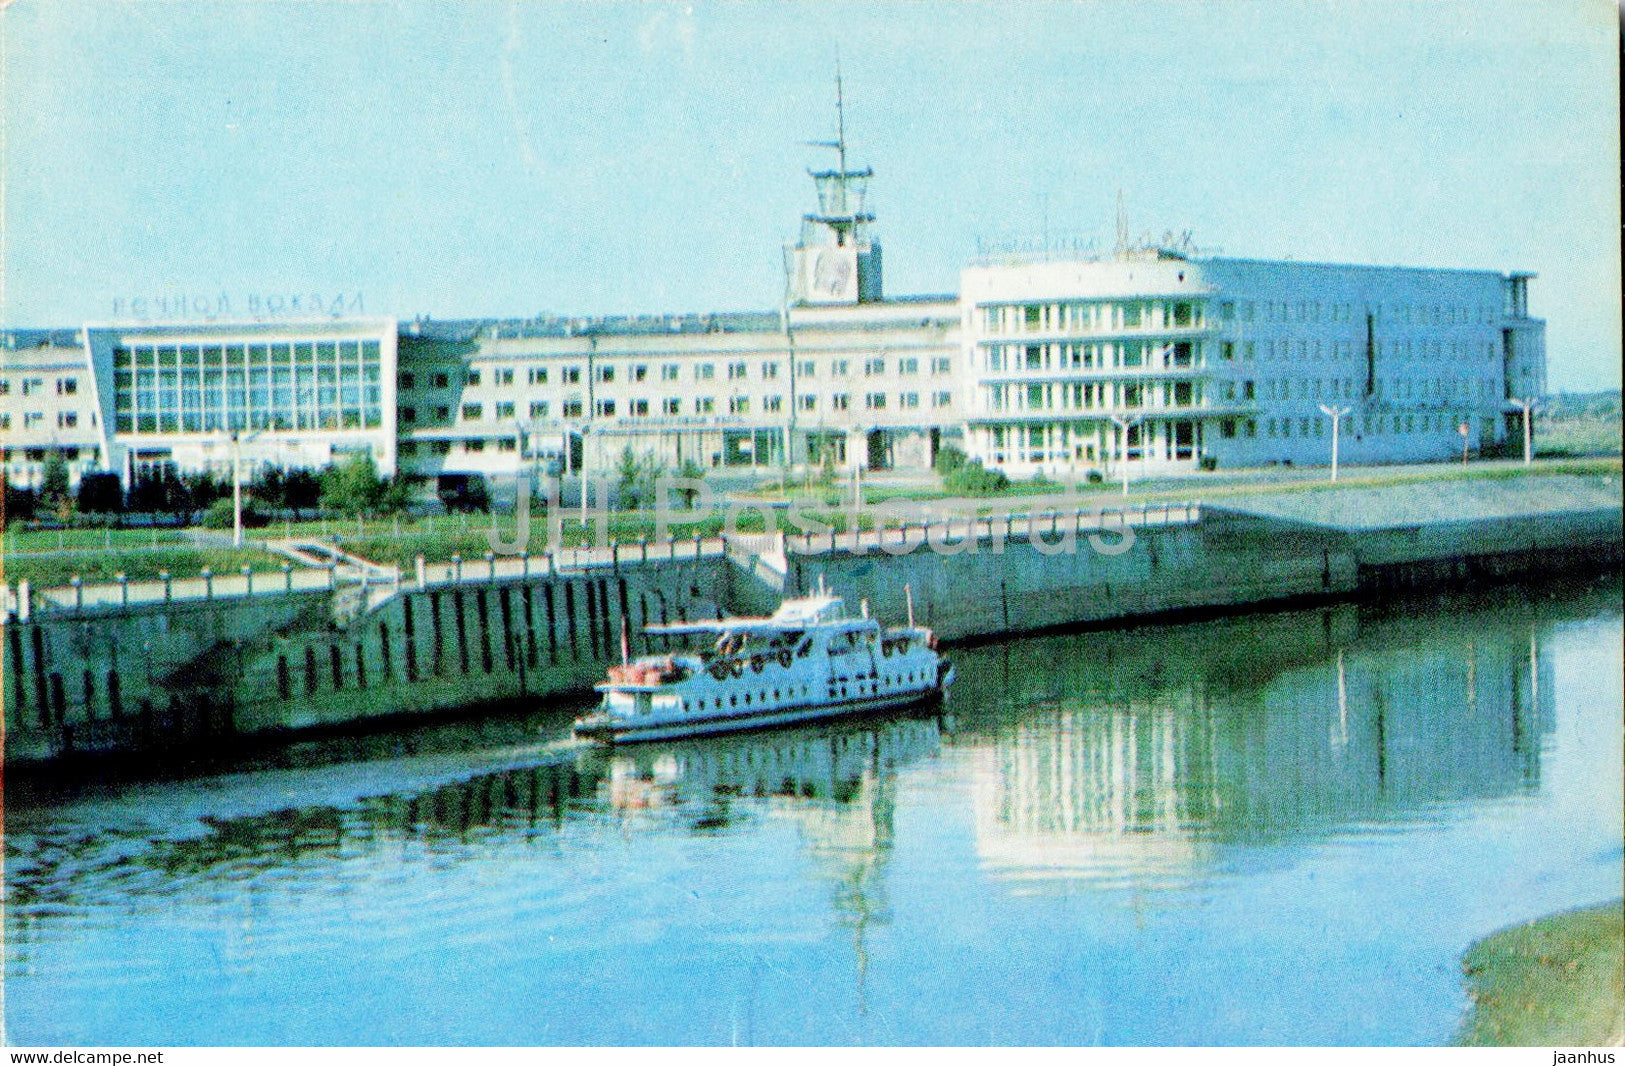 Omsk - Omi river embankment - ship - boat - 1971 - Russia USSR - unused - JH Postcards